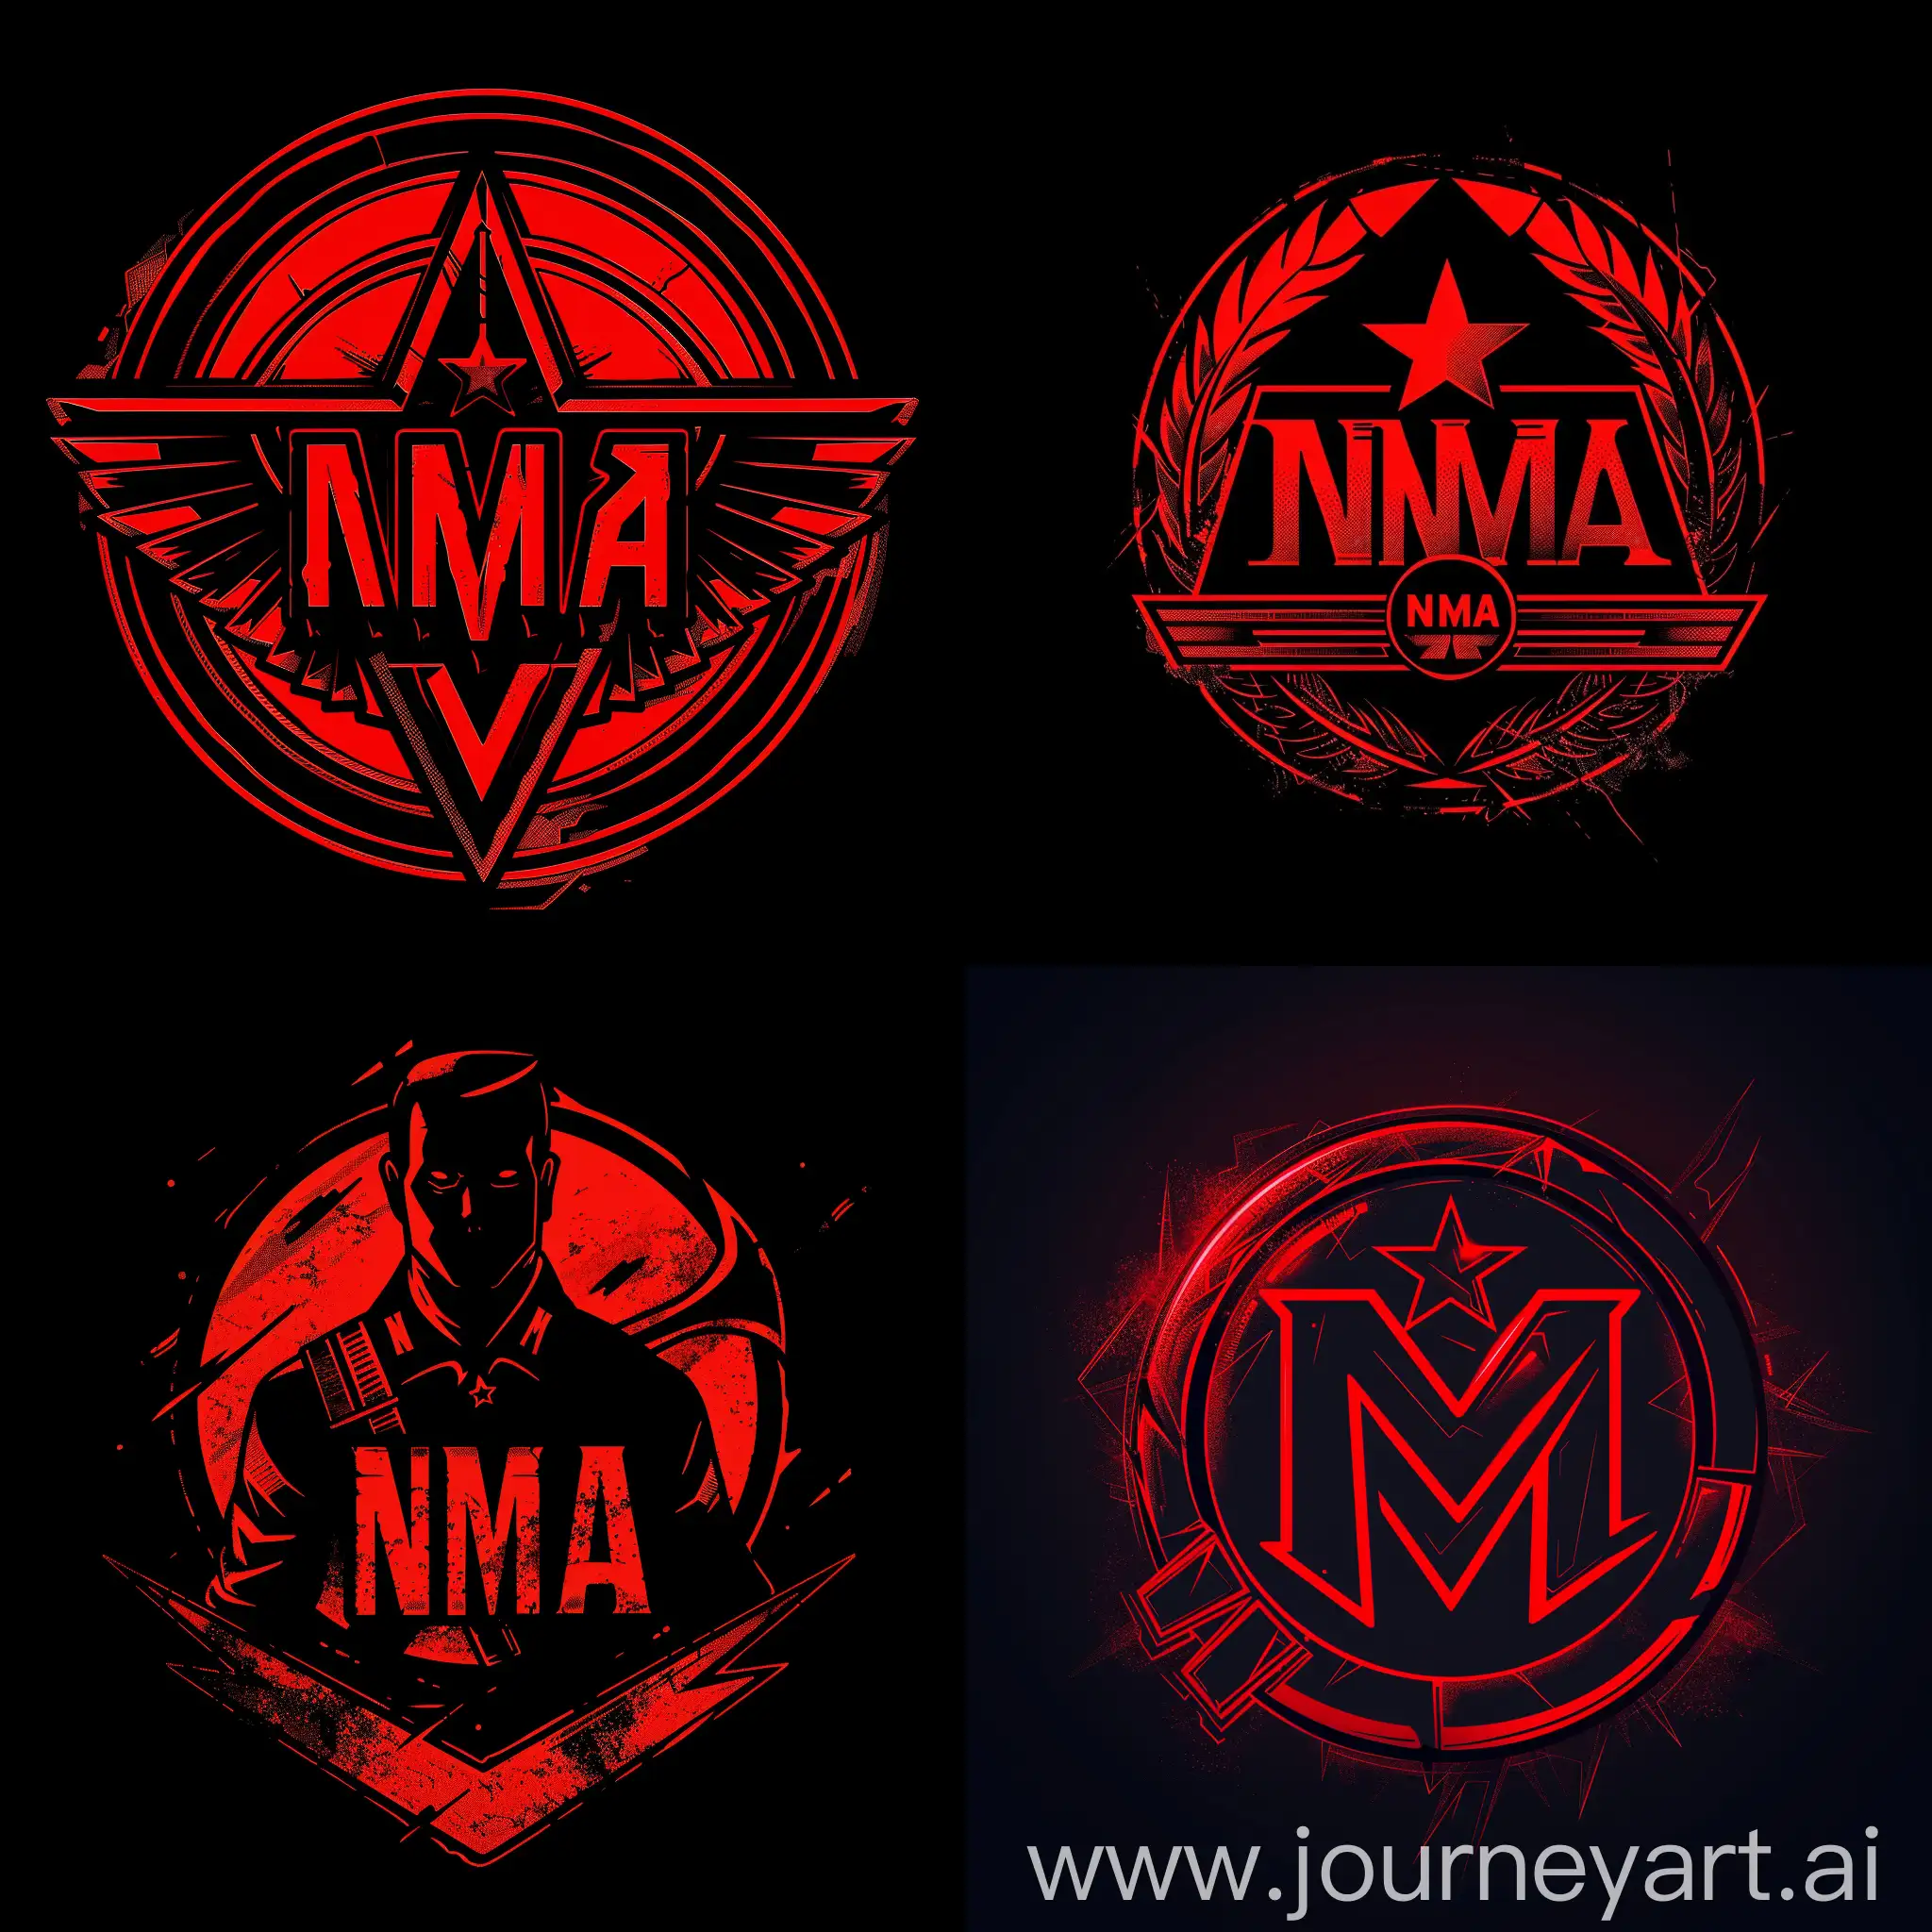 Red-and-Black-Communist-Logotype-NMA-Inspired-Artwork